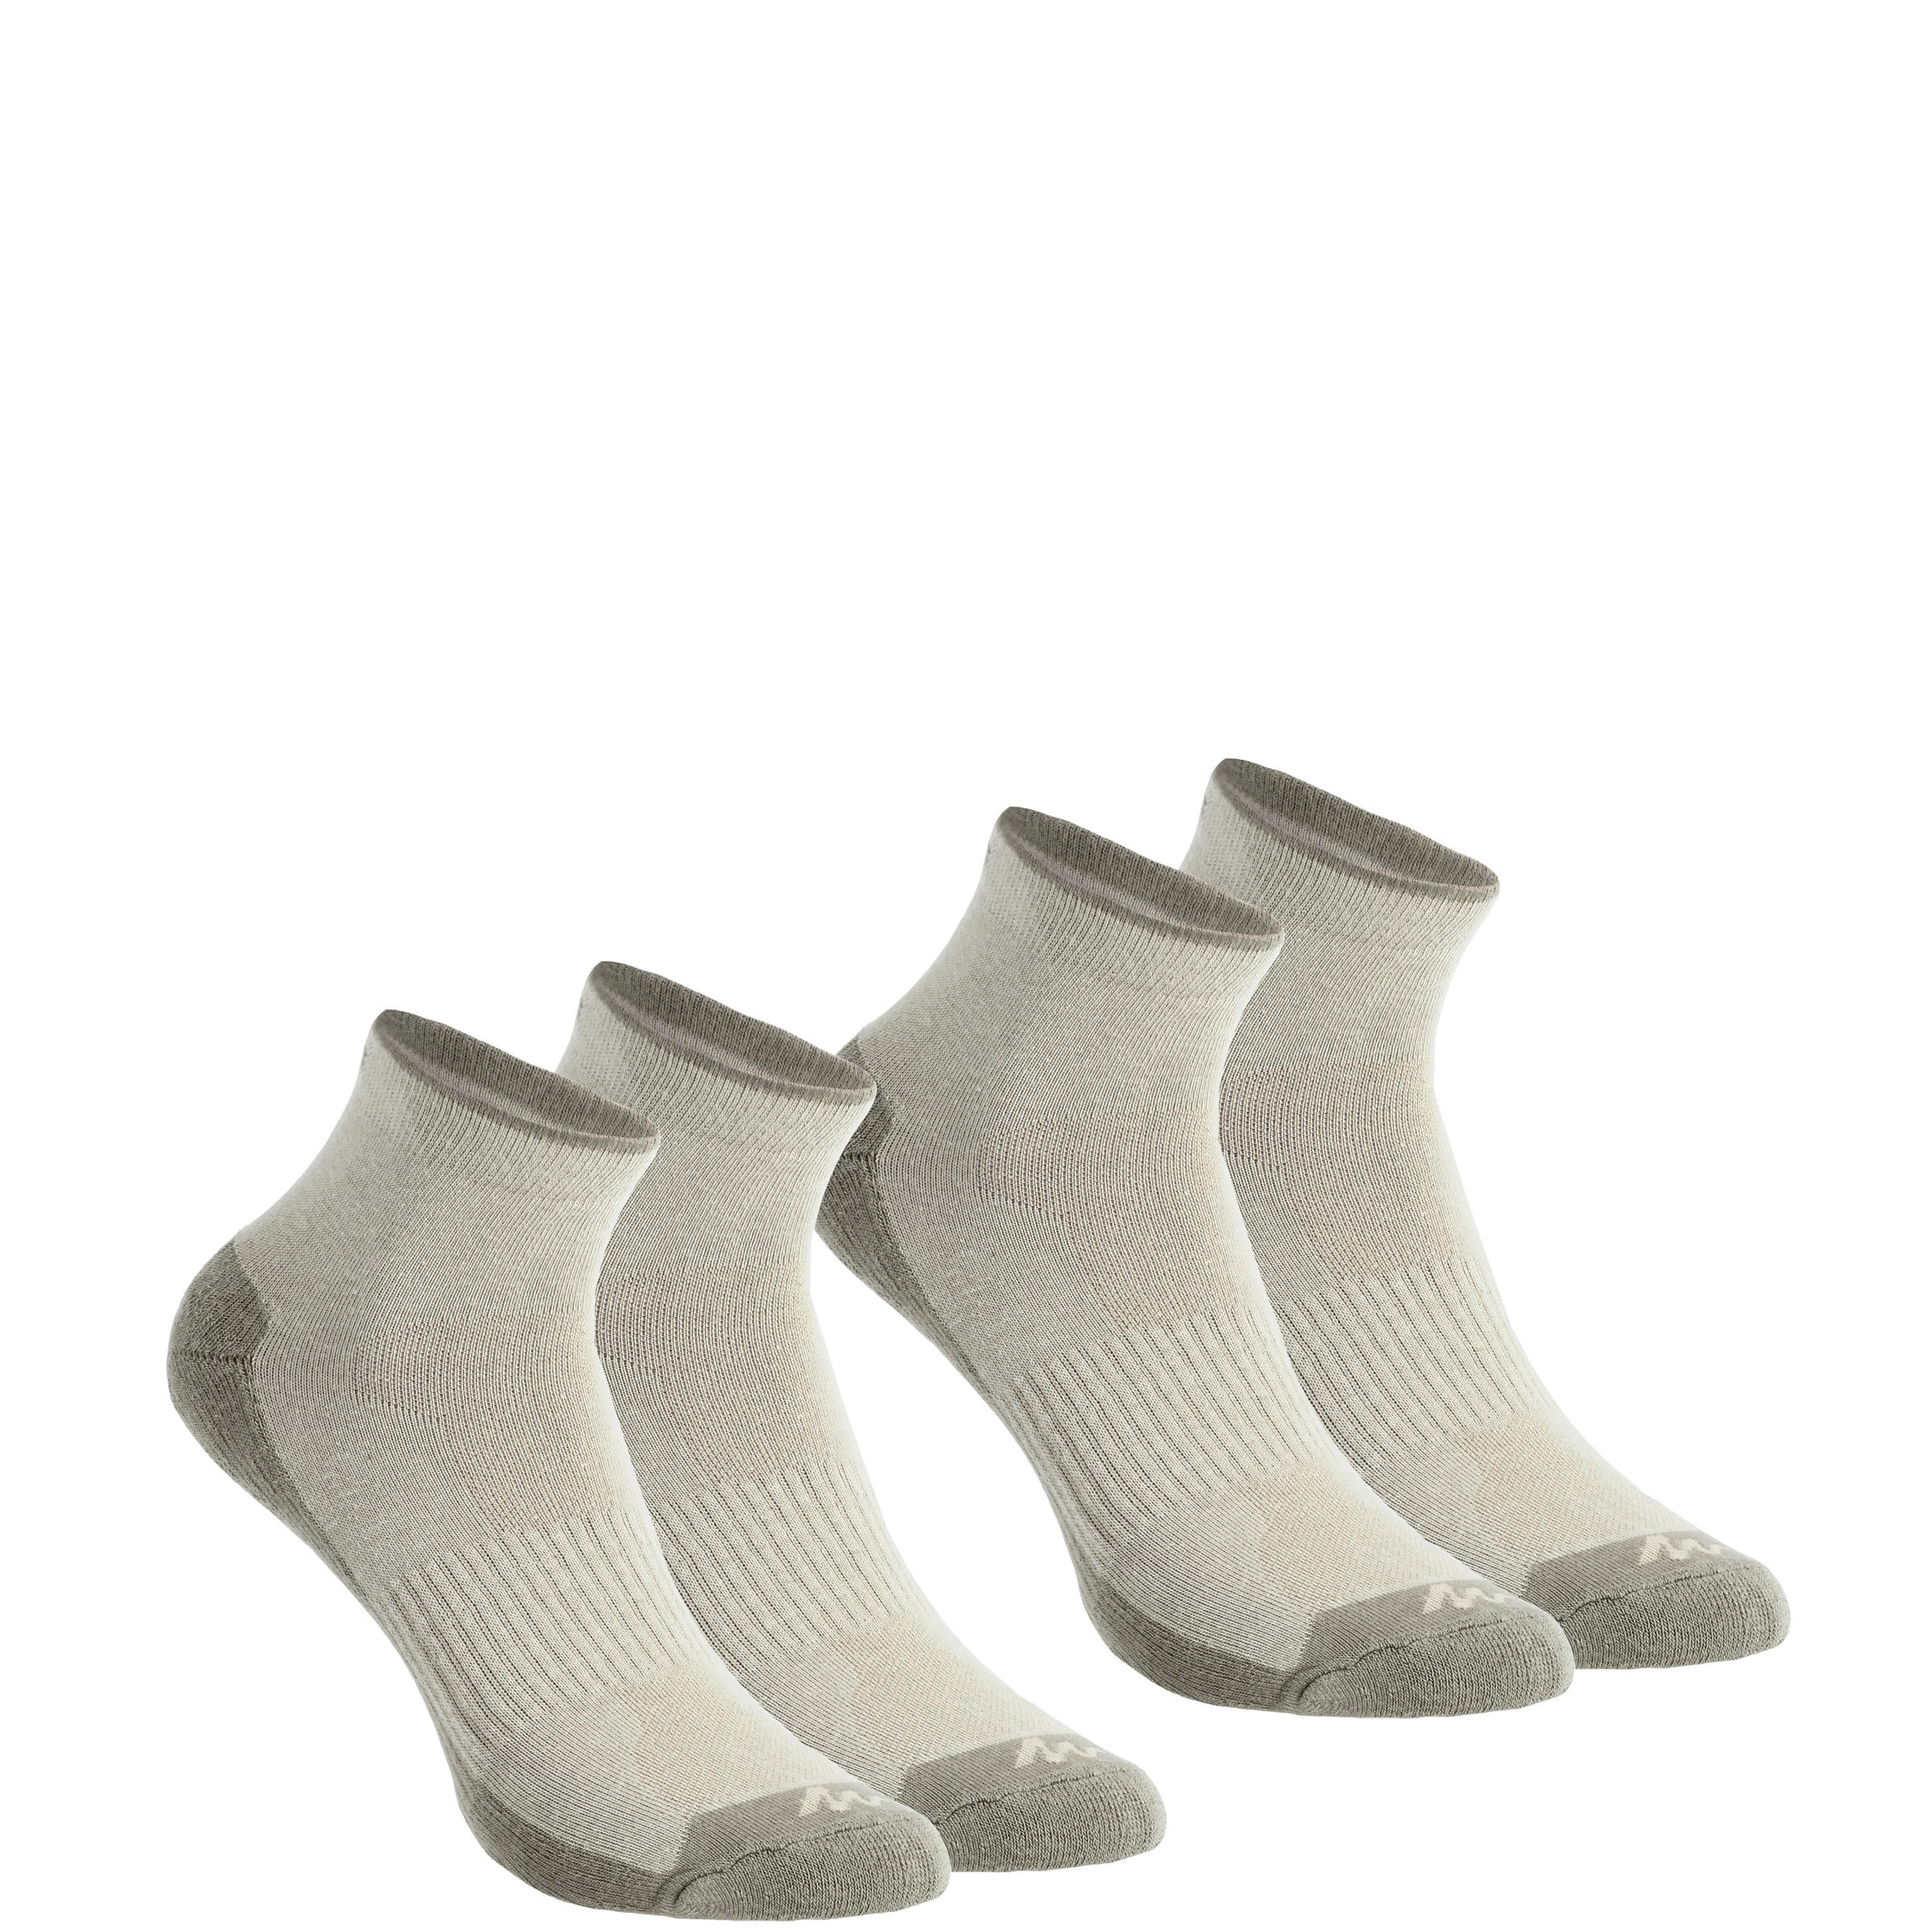 QUECHUA Walking Mid Socks - 2 Pack - Beige